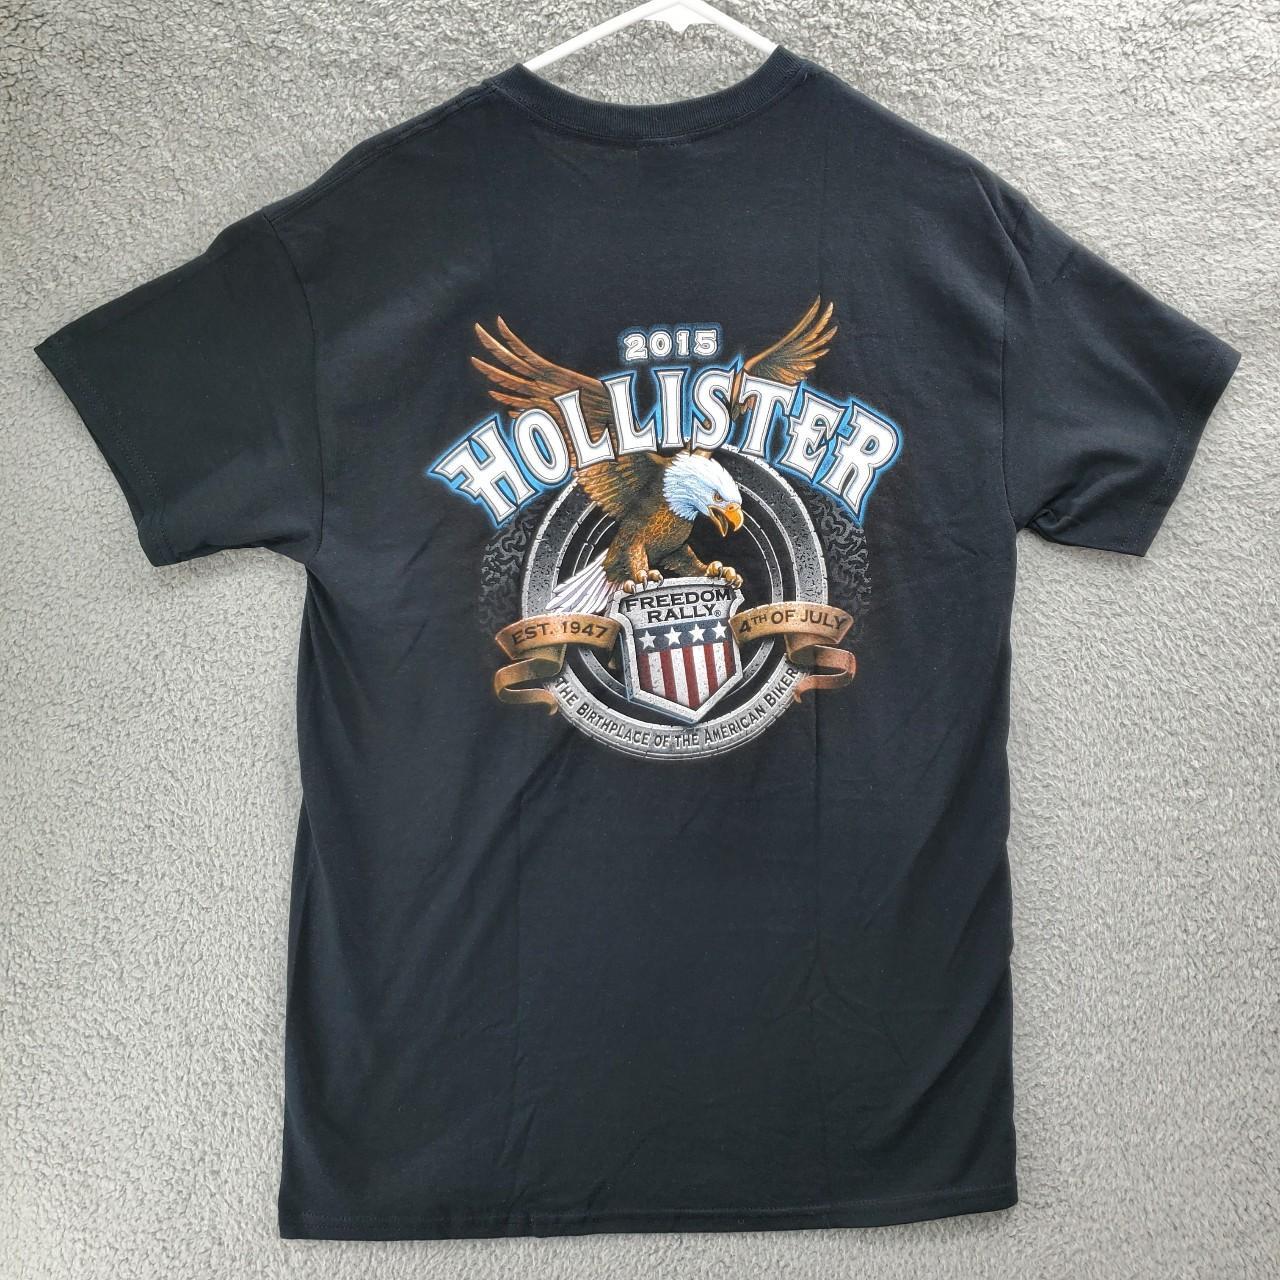 Hollister t-shirt. Size large, fits like a medium. - Depop